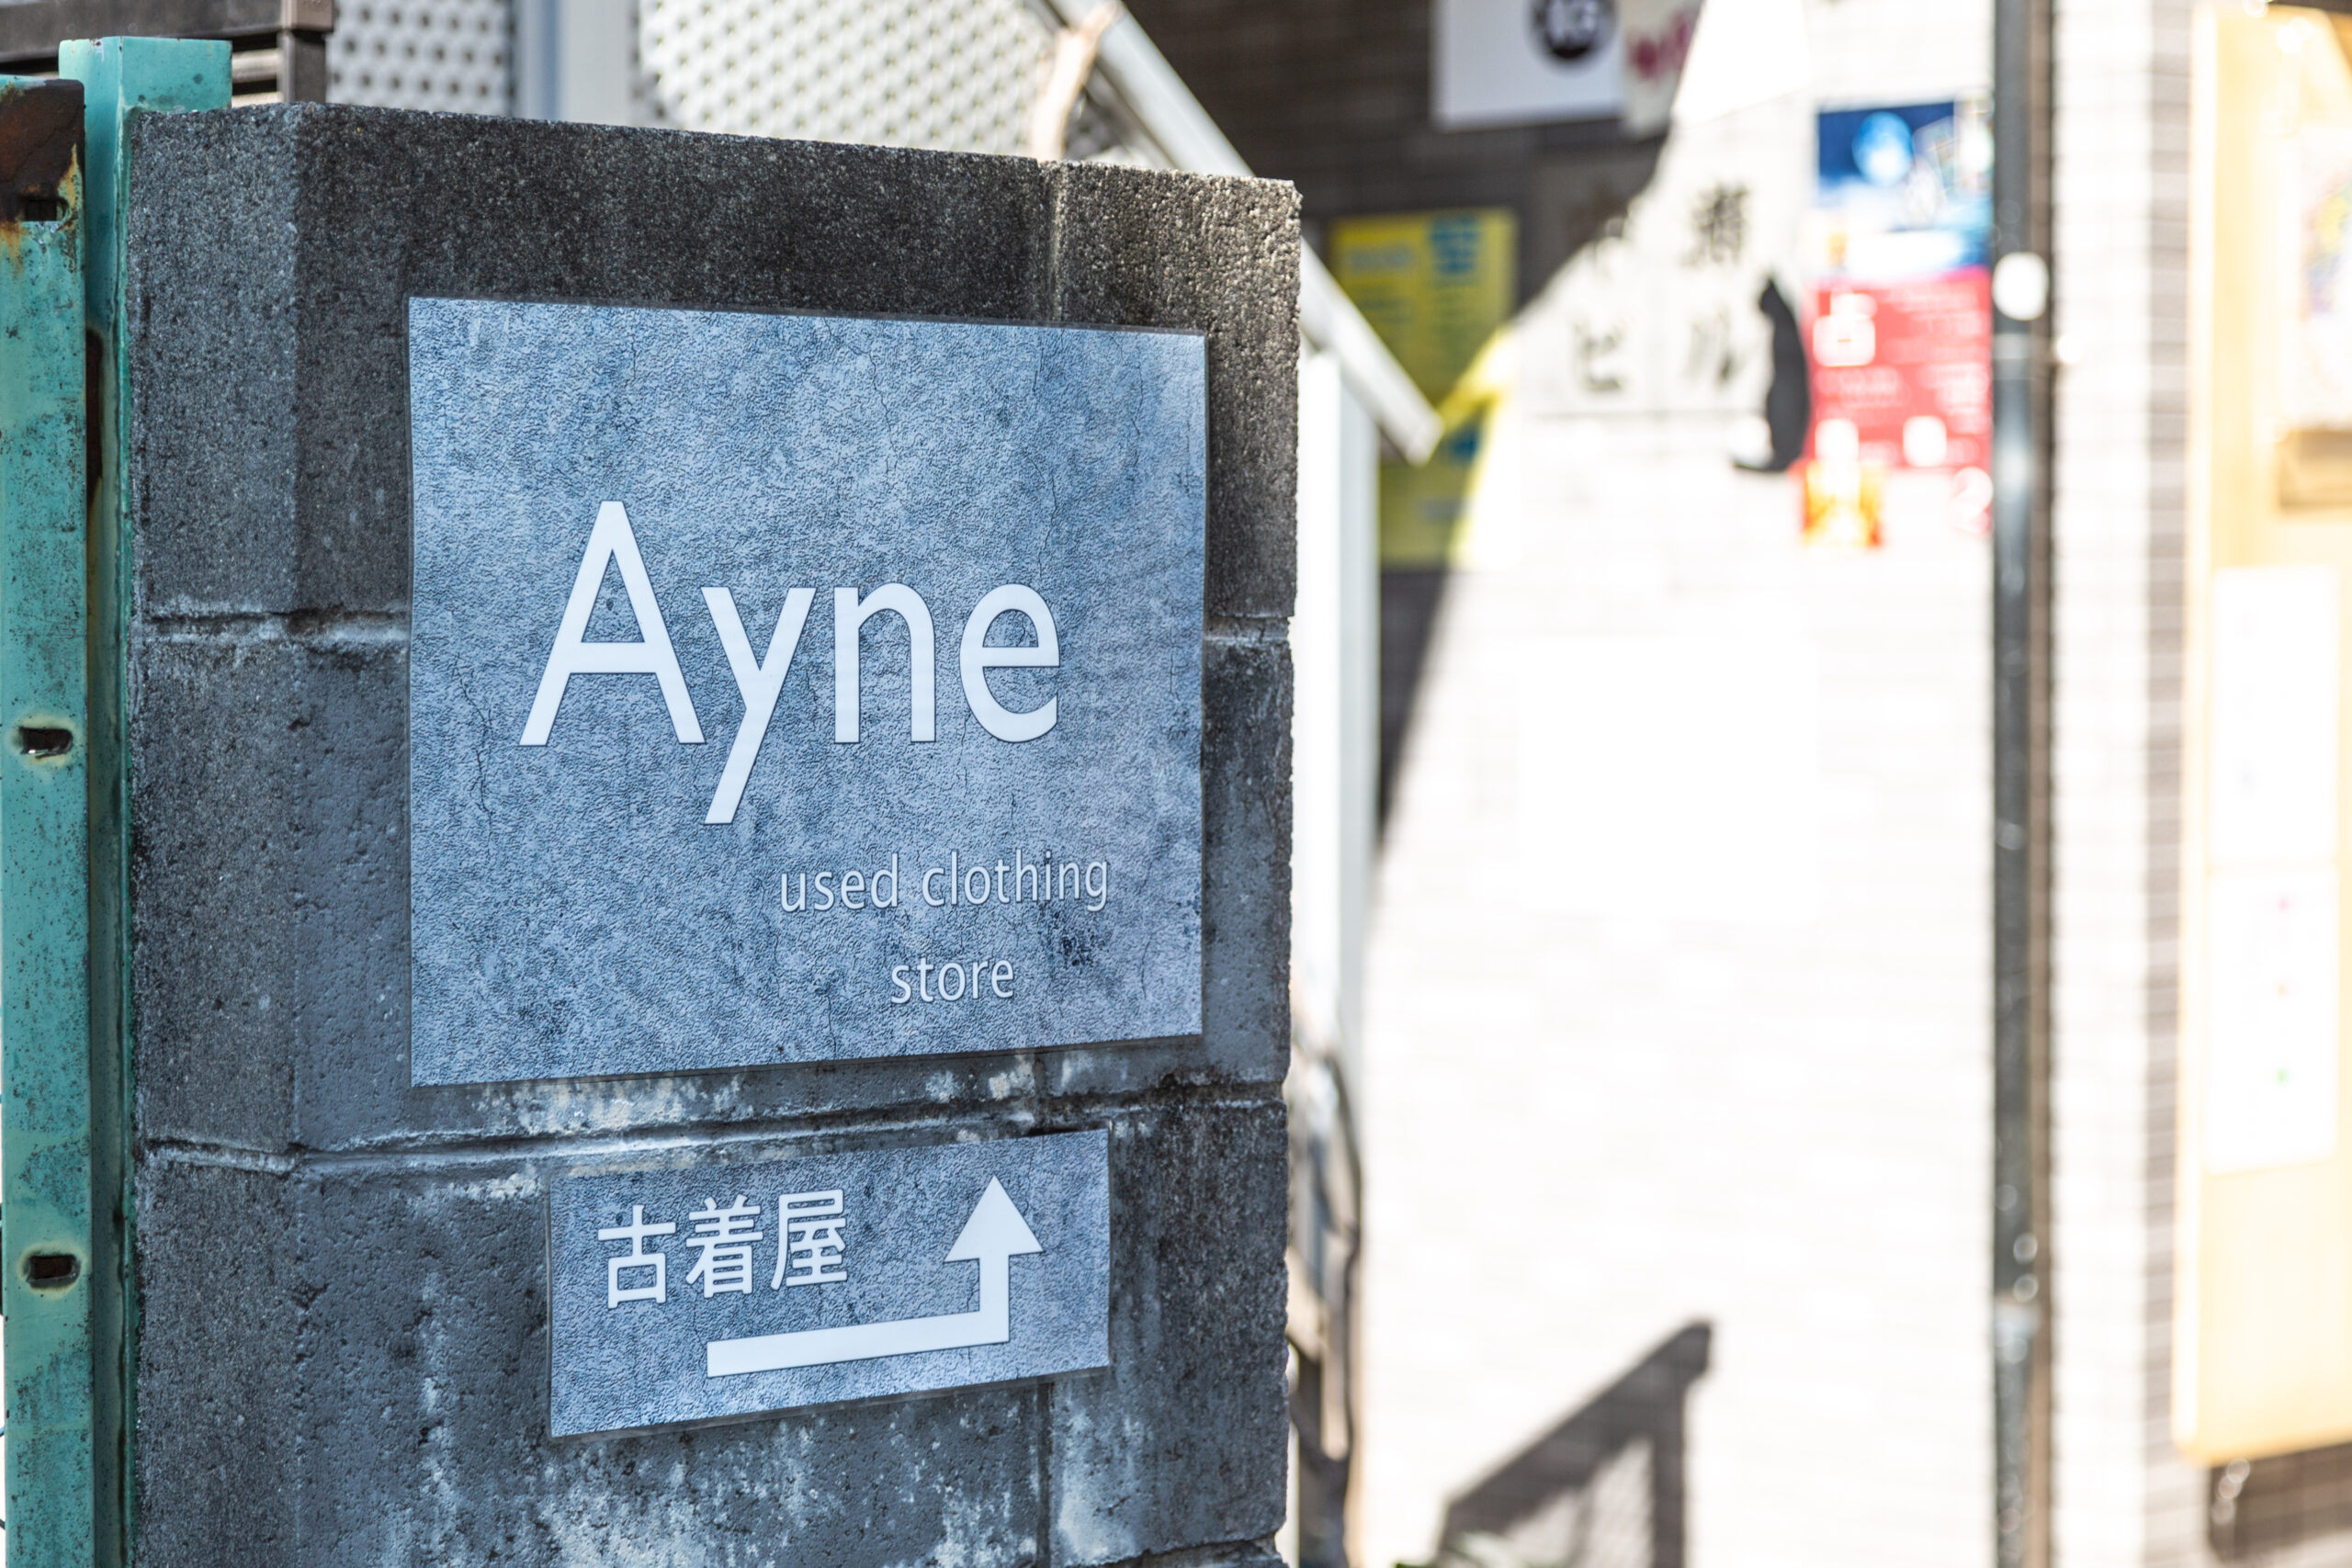 Ayne Tokyo(アイントウキョウ)の画像02